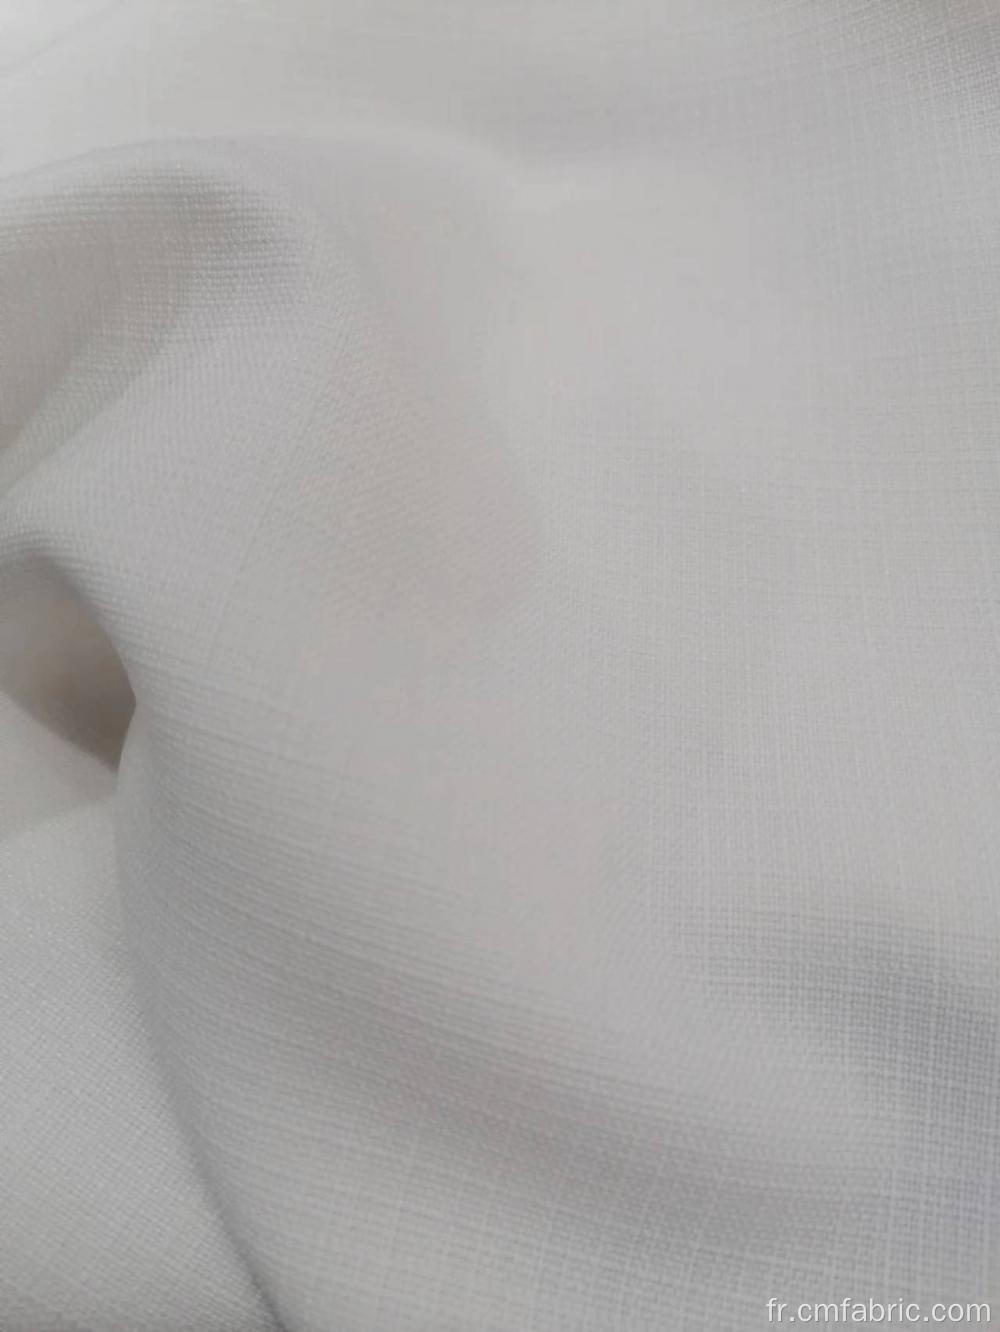 Polyester rayonne spandex slub imiter le tissu en linge